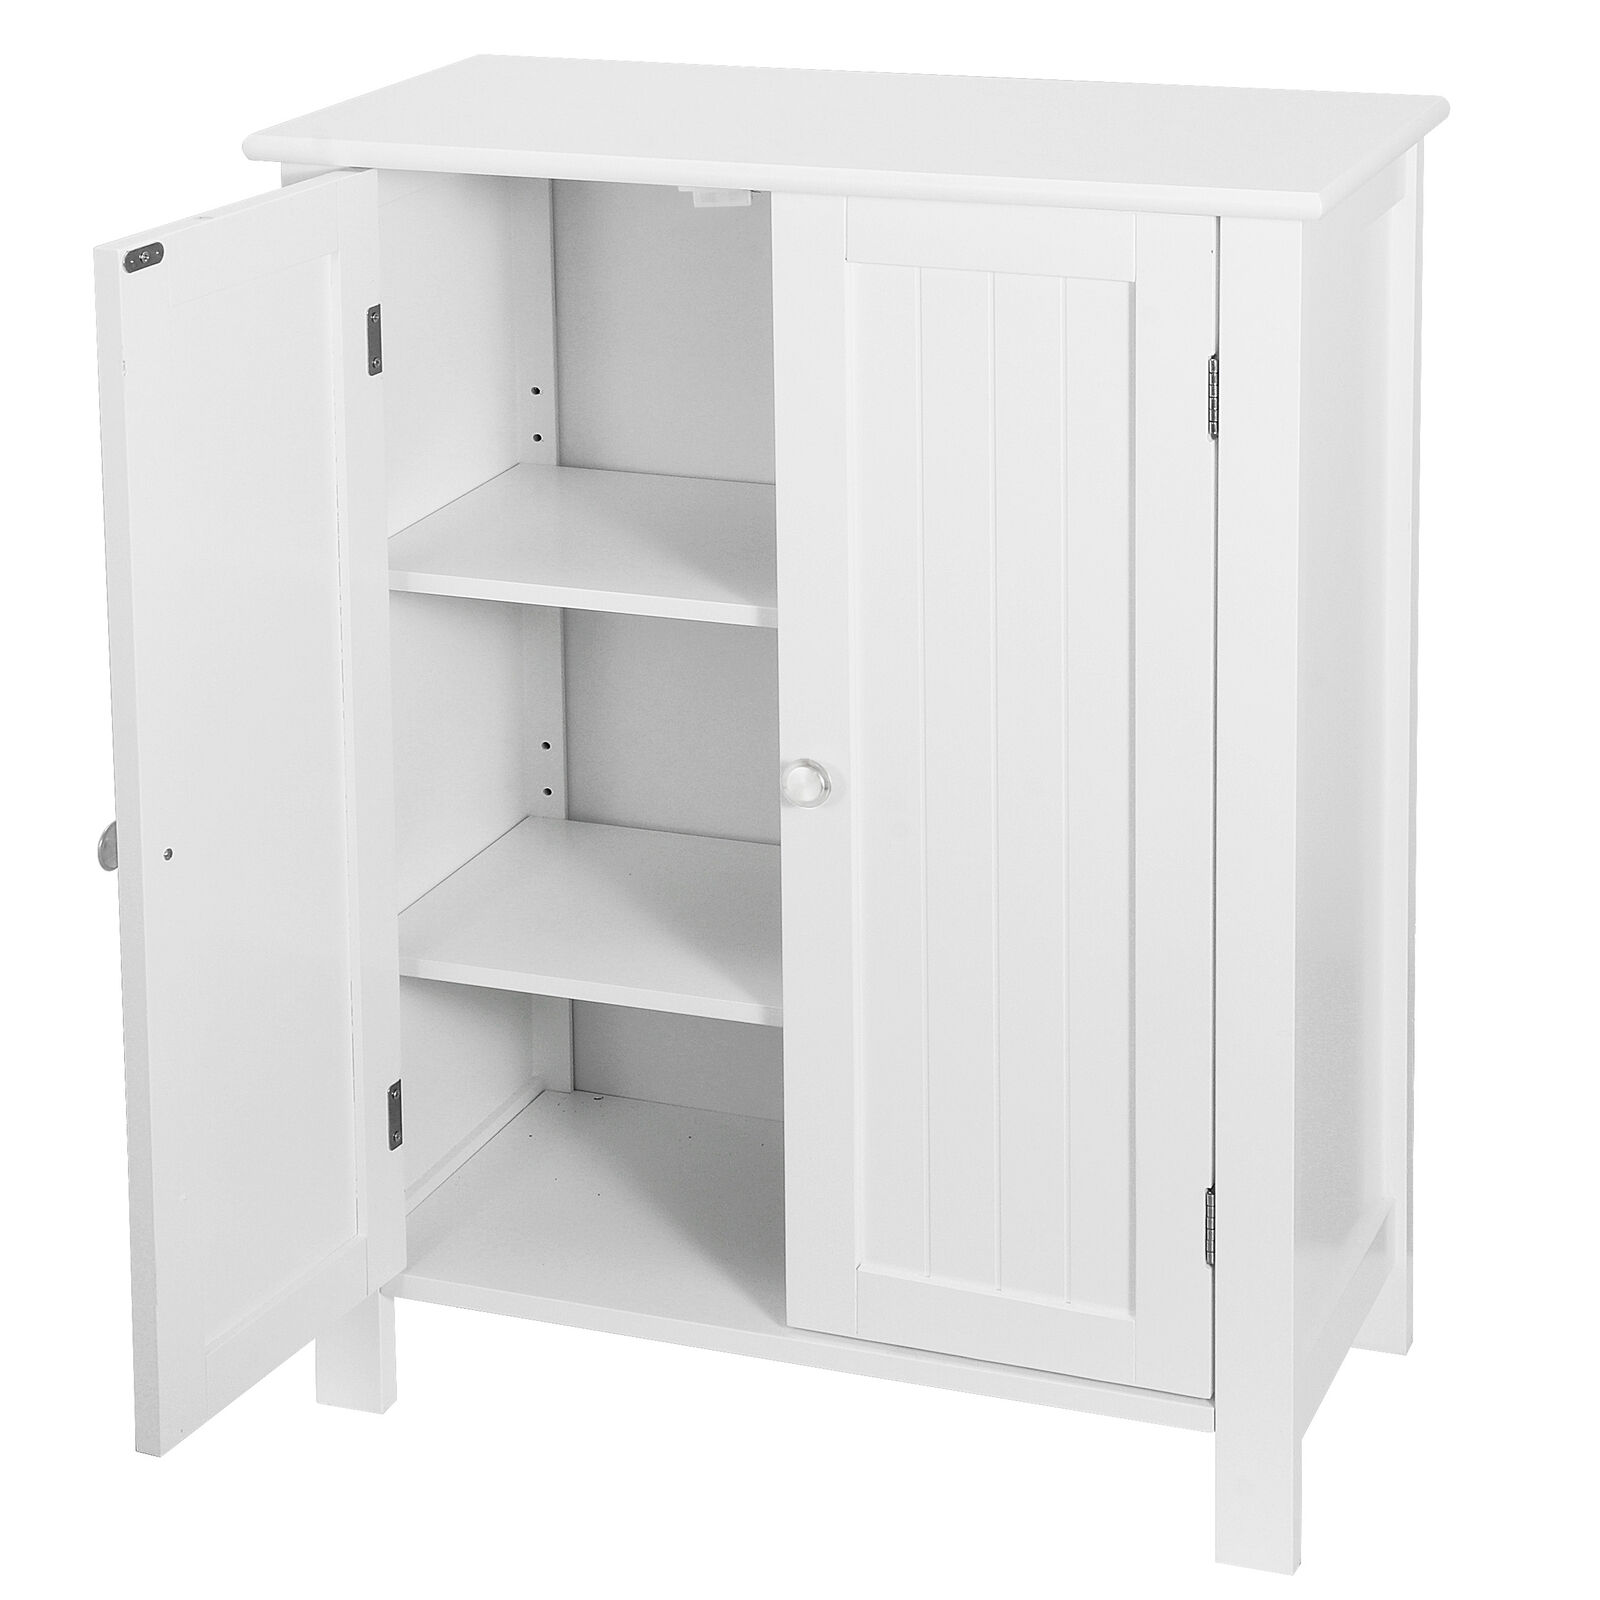 White Wooden Bathroom Floor Cabinet Storage Cupboard 3 Shelves Free Standing